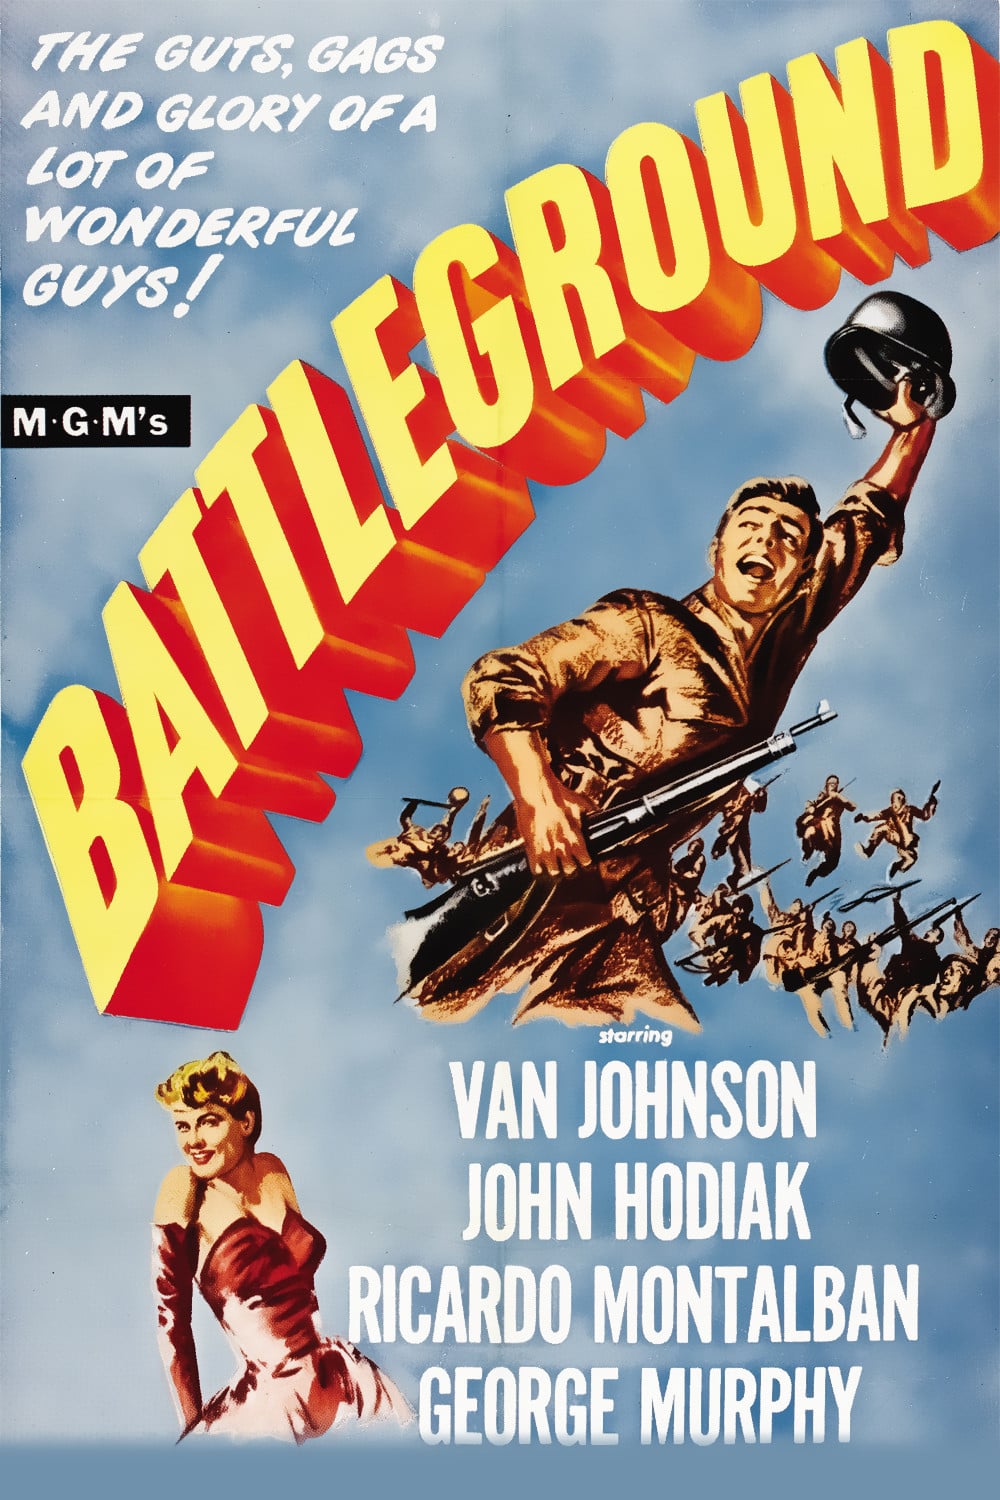 Poster for the movie "Battleground"